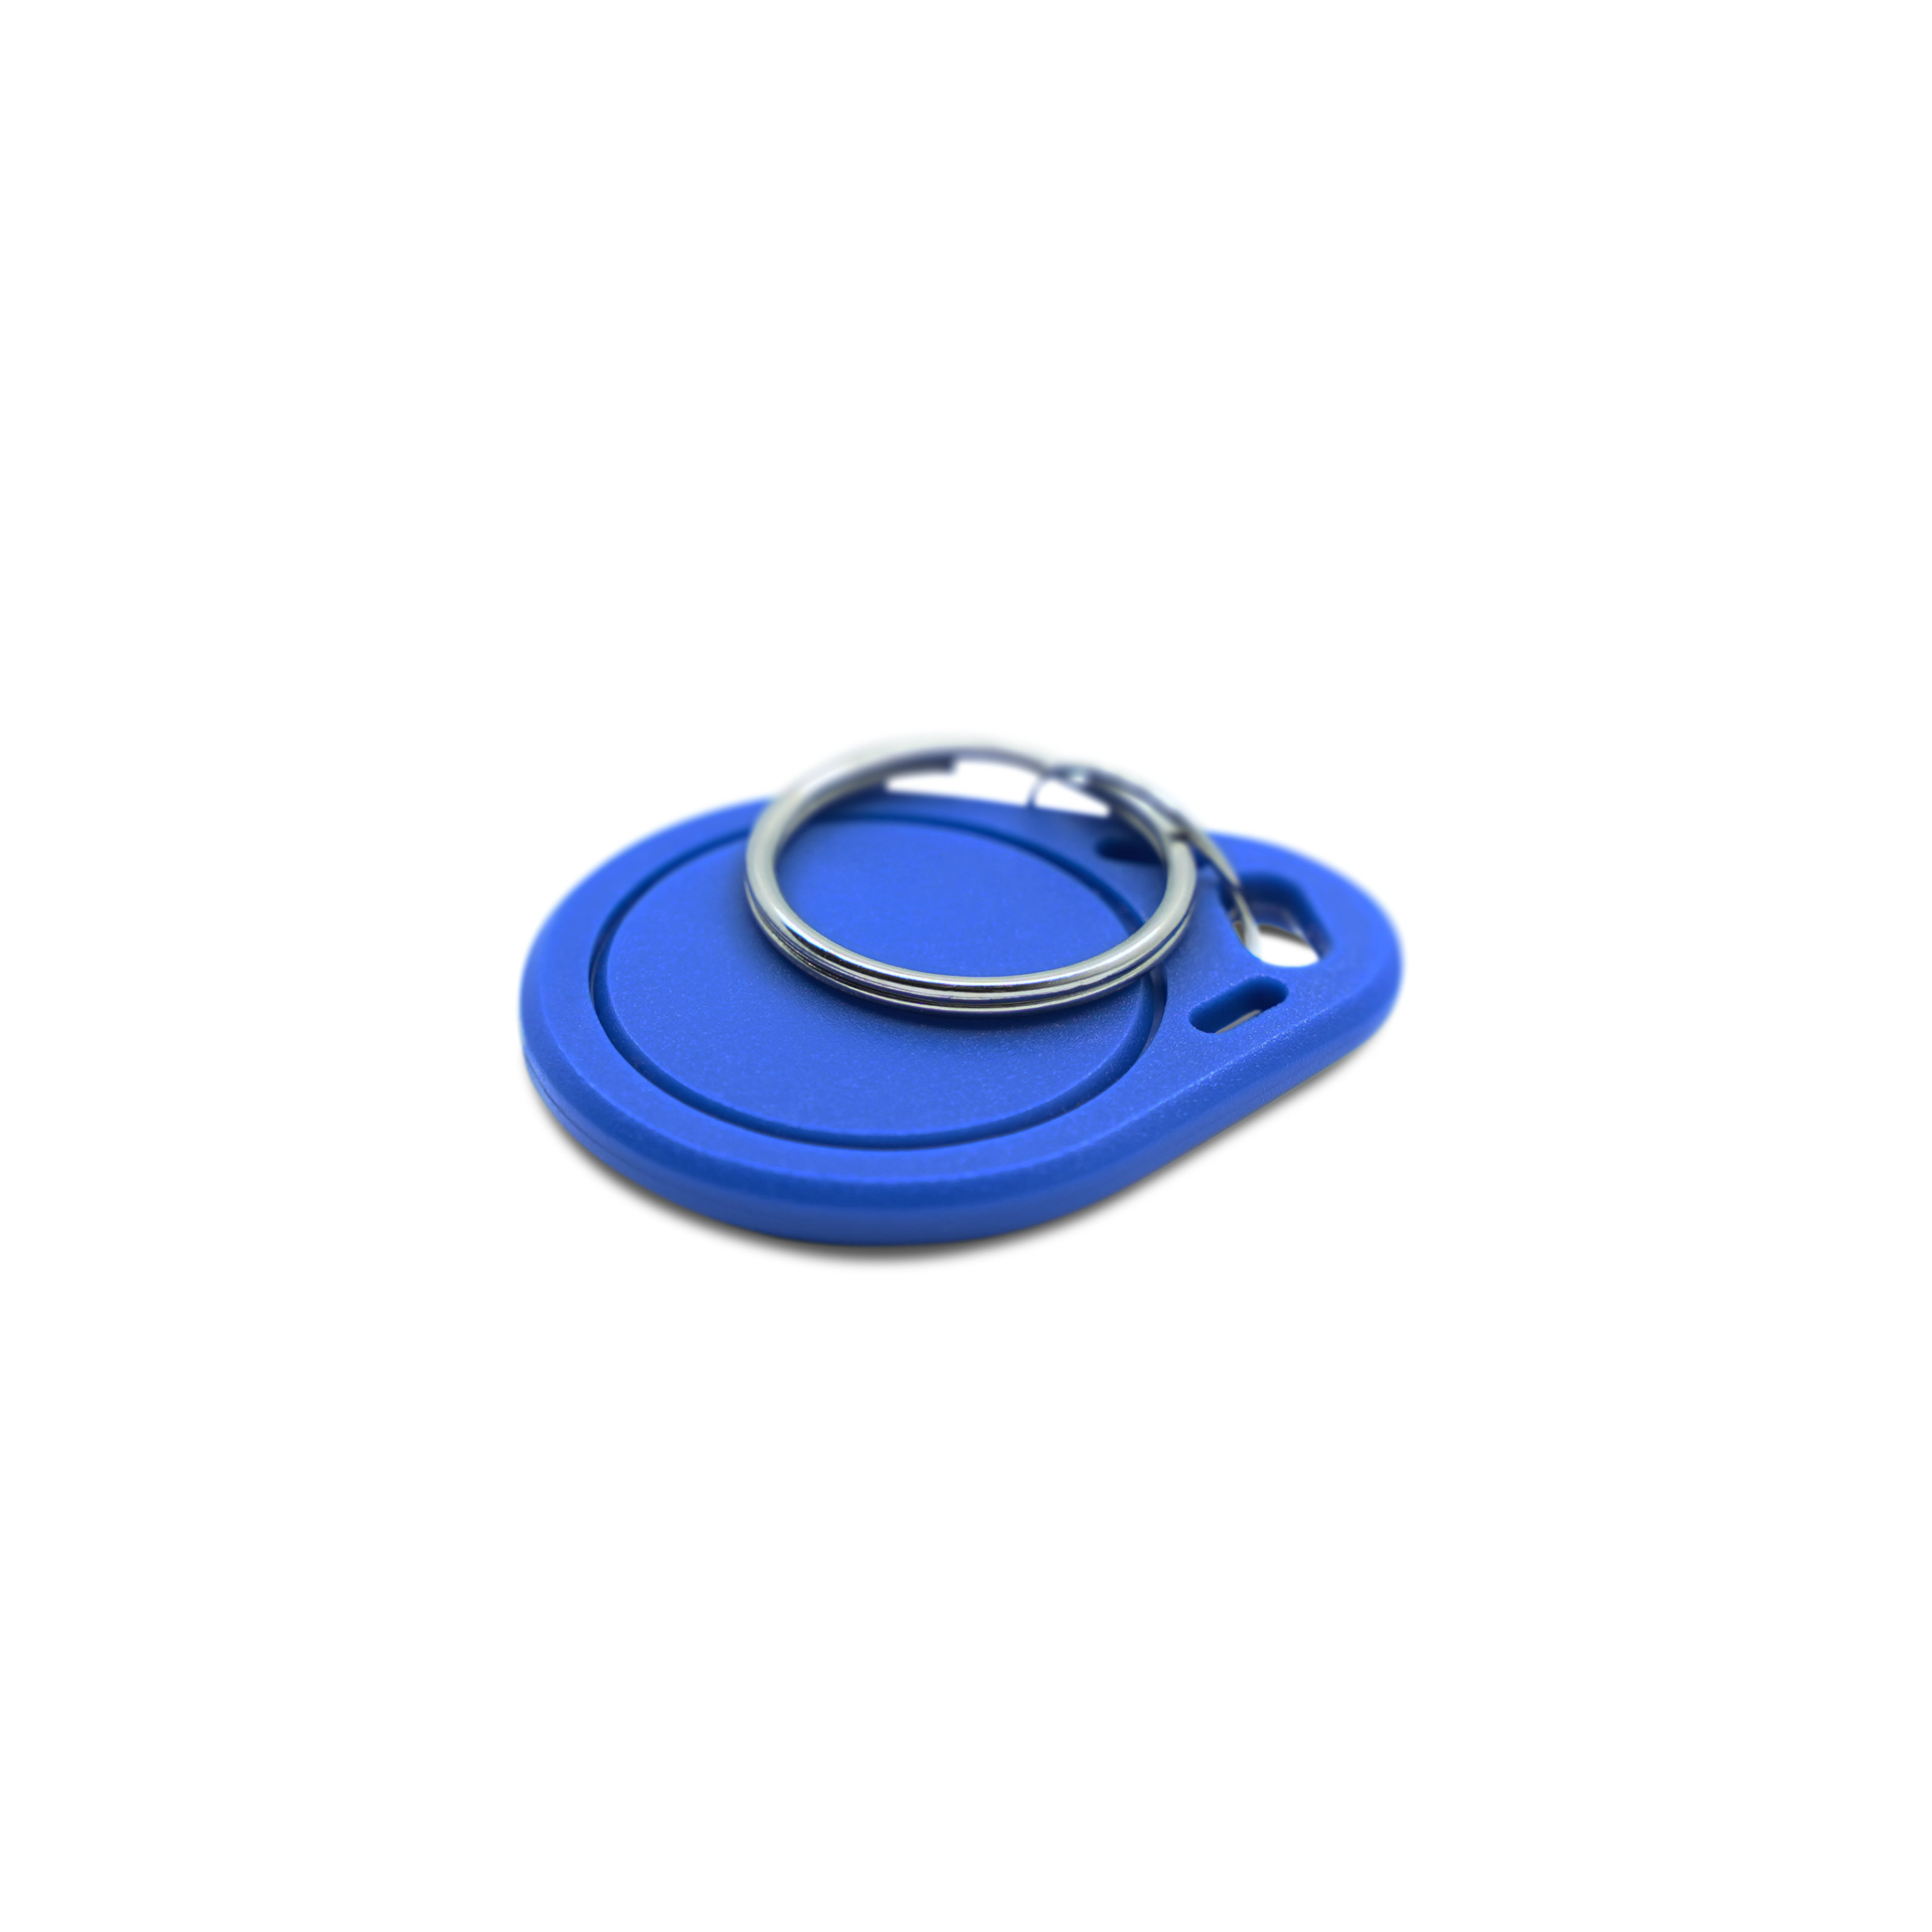 NFC tag ABS - 40 x 32 mm - MIFARE DESFire EV2 8k - 8192 byte - blue